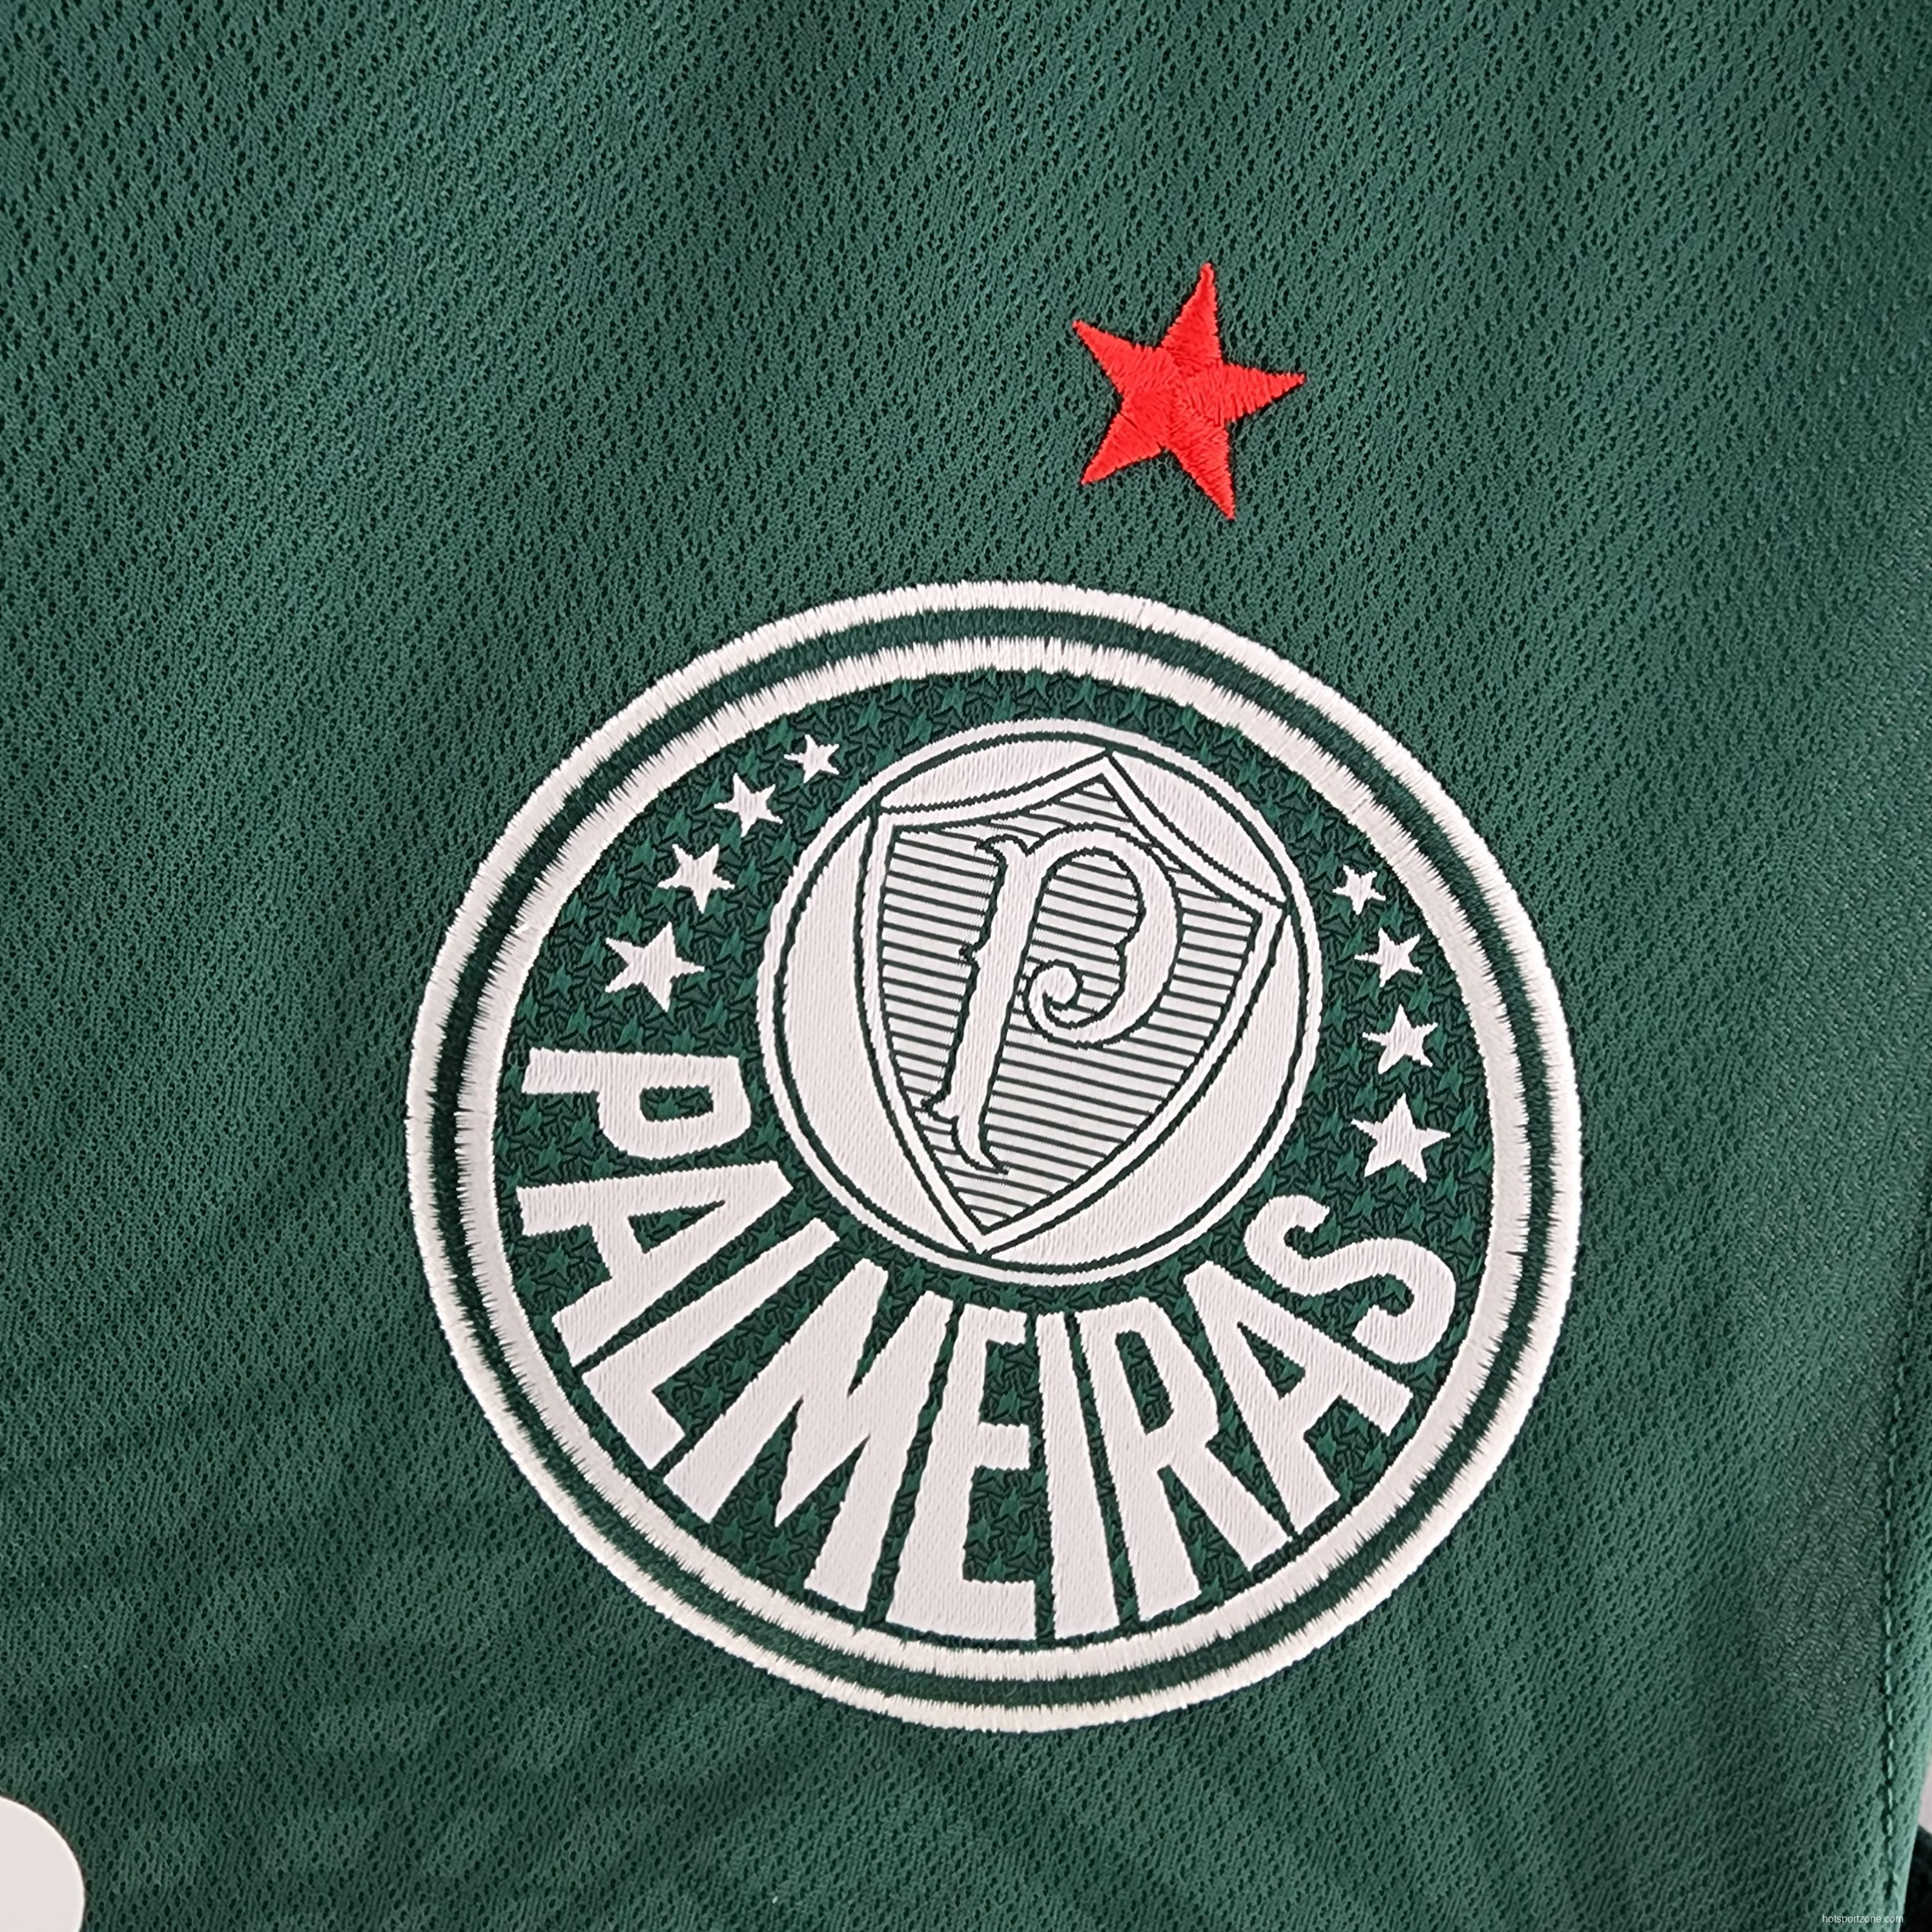 22/23 Palmeiras Home Vest Soccer Jersey